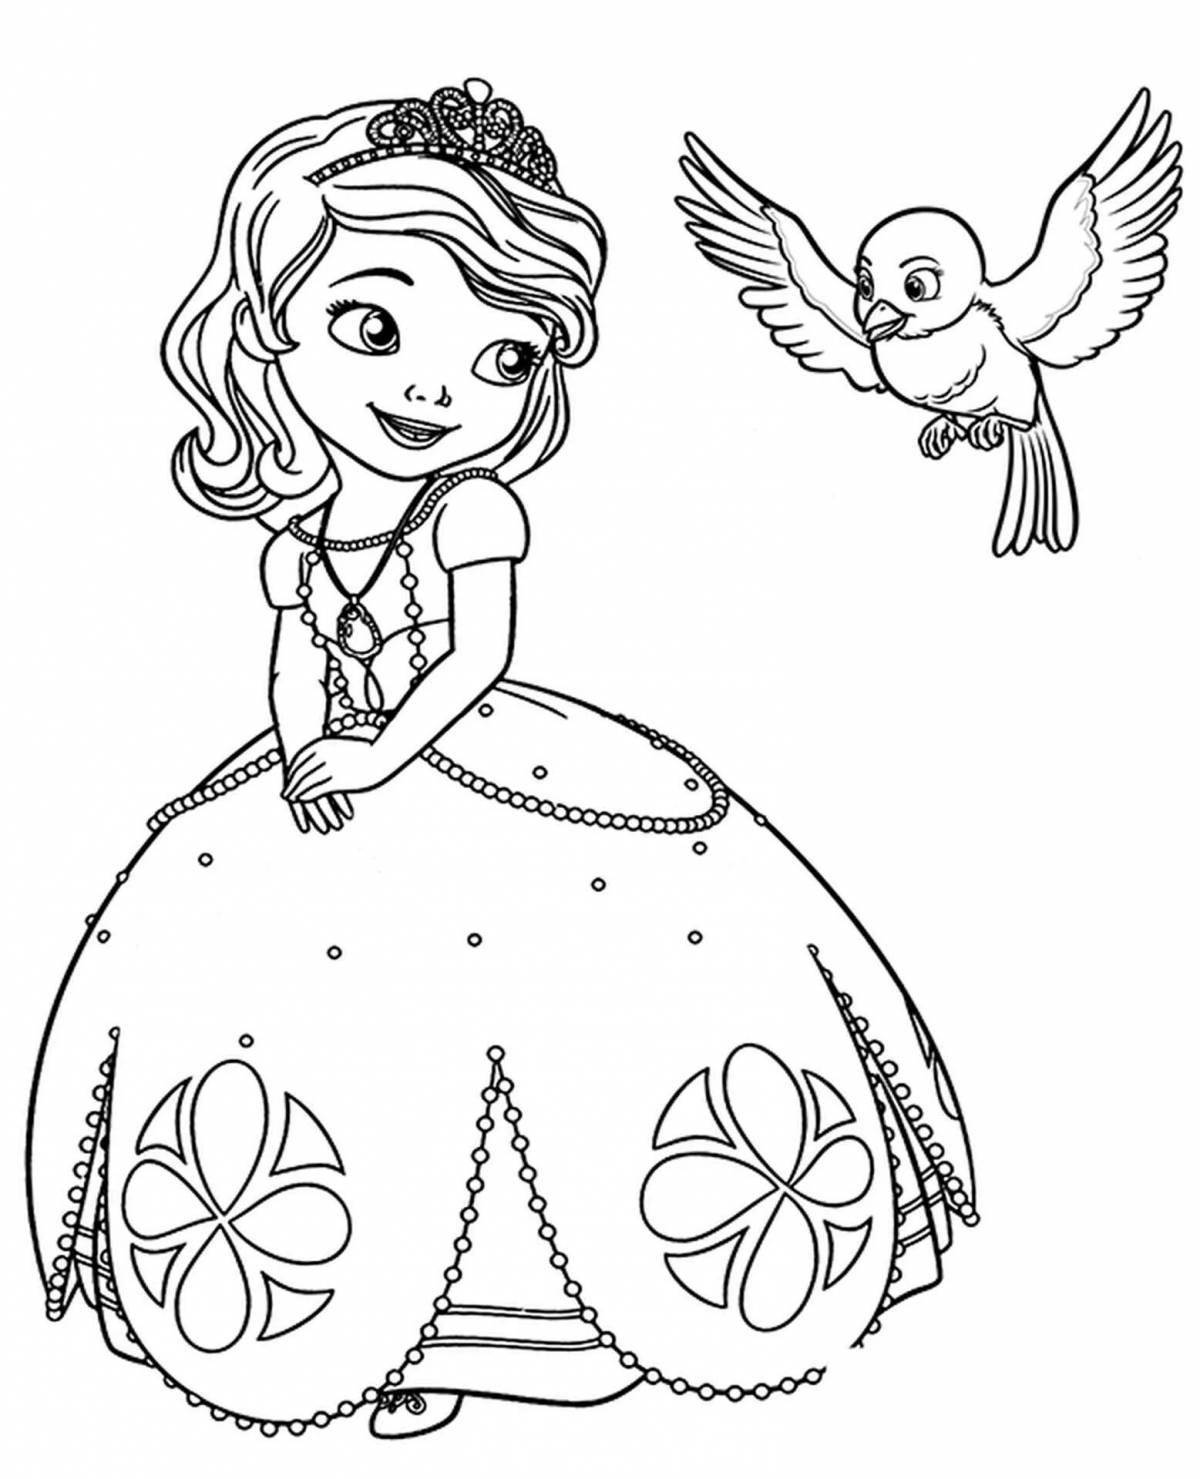 Fabulous princess sofia coloring book for kids